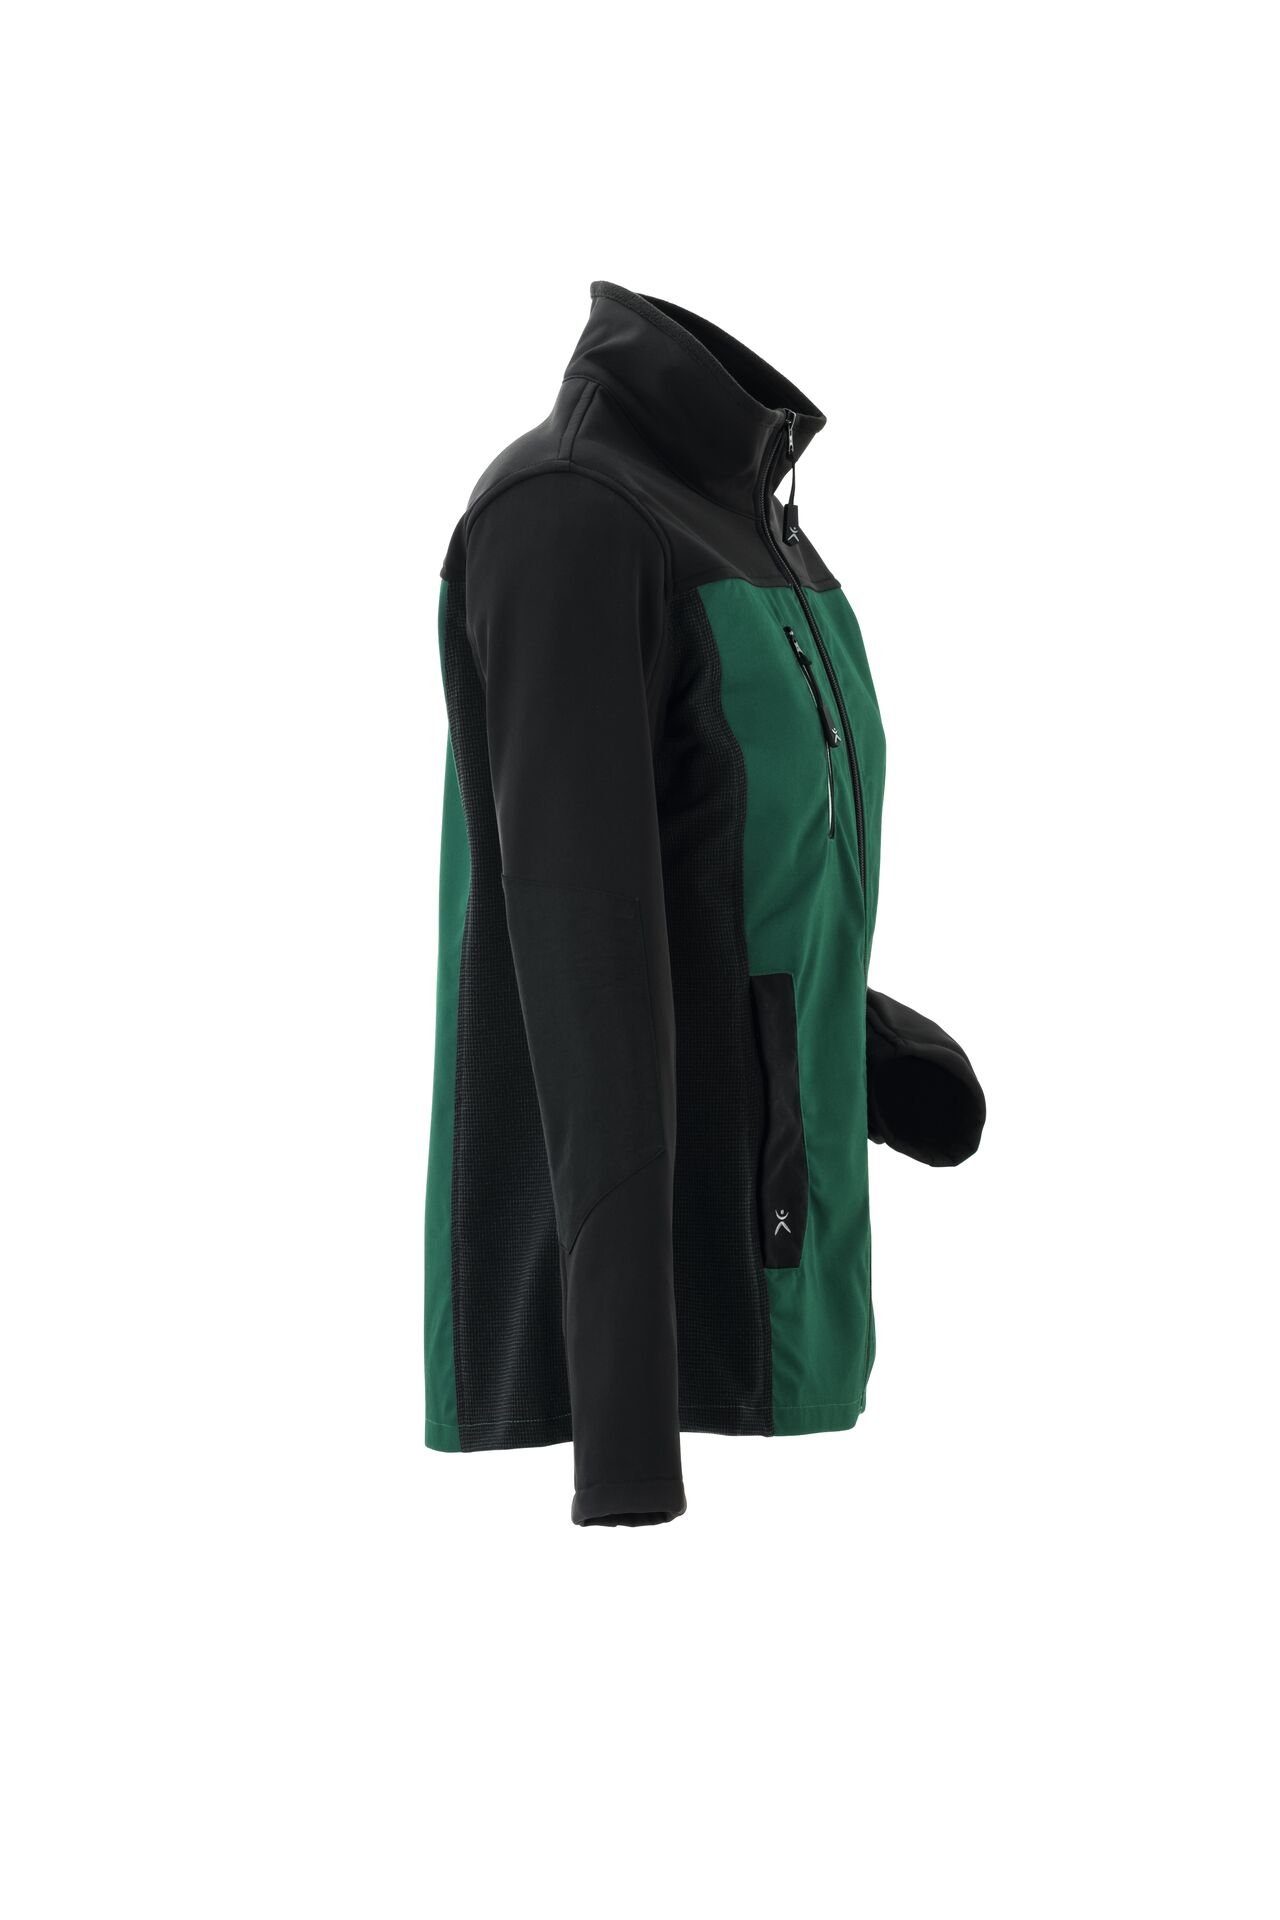 Planam Arbeitshose Damen Hybridjacke Norit grün/schwarz Größe 40 (1-tlg)